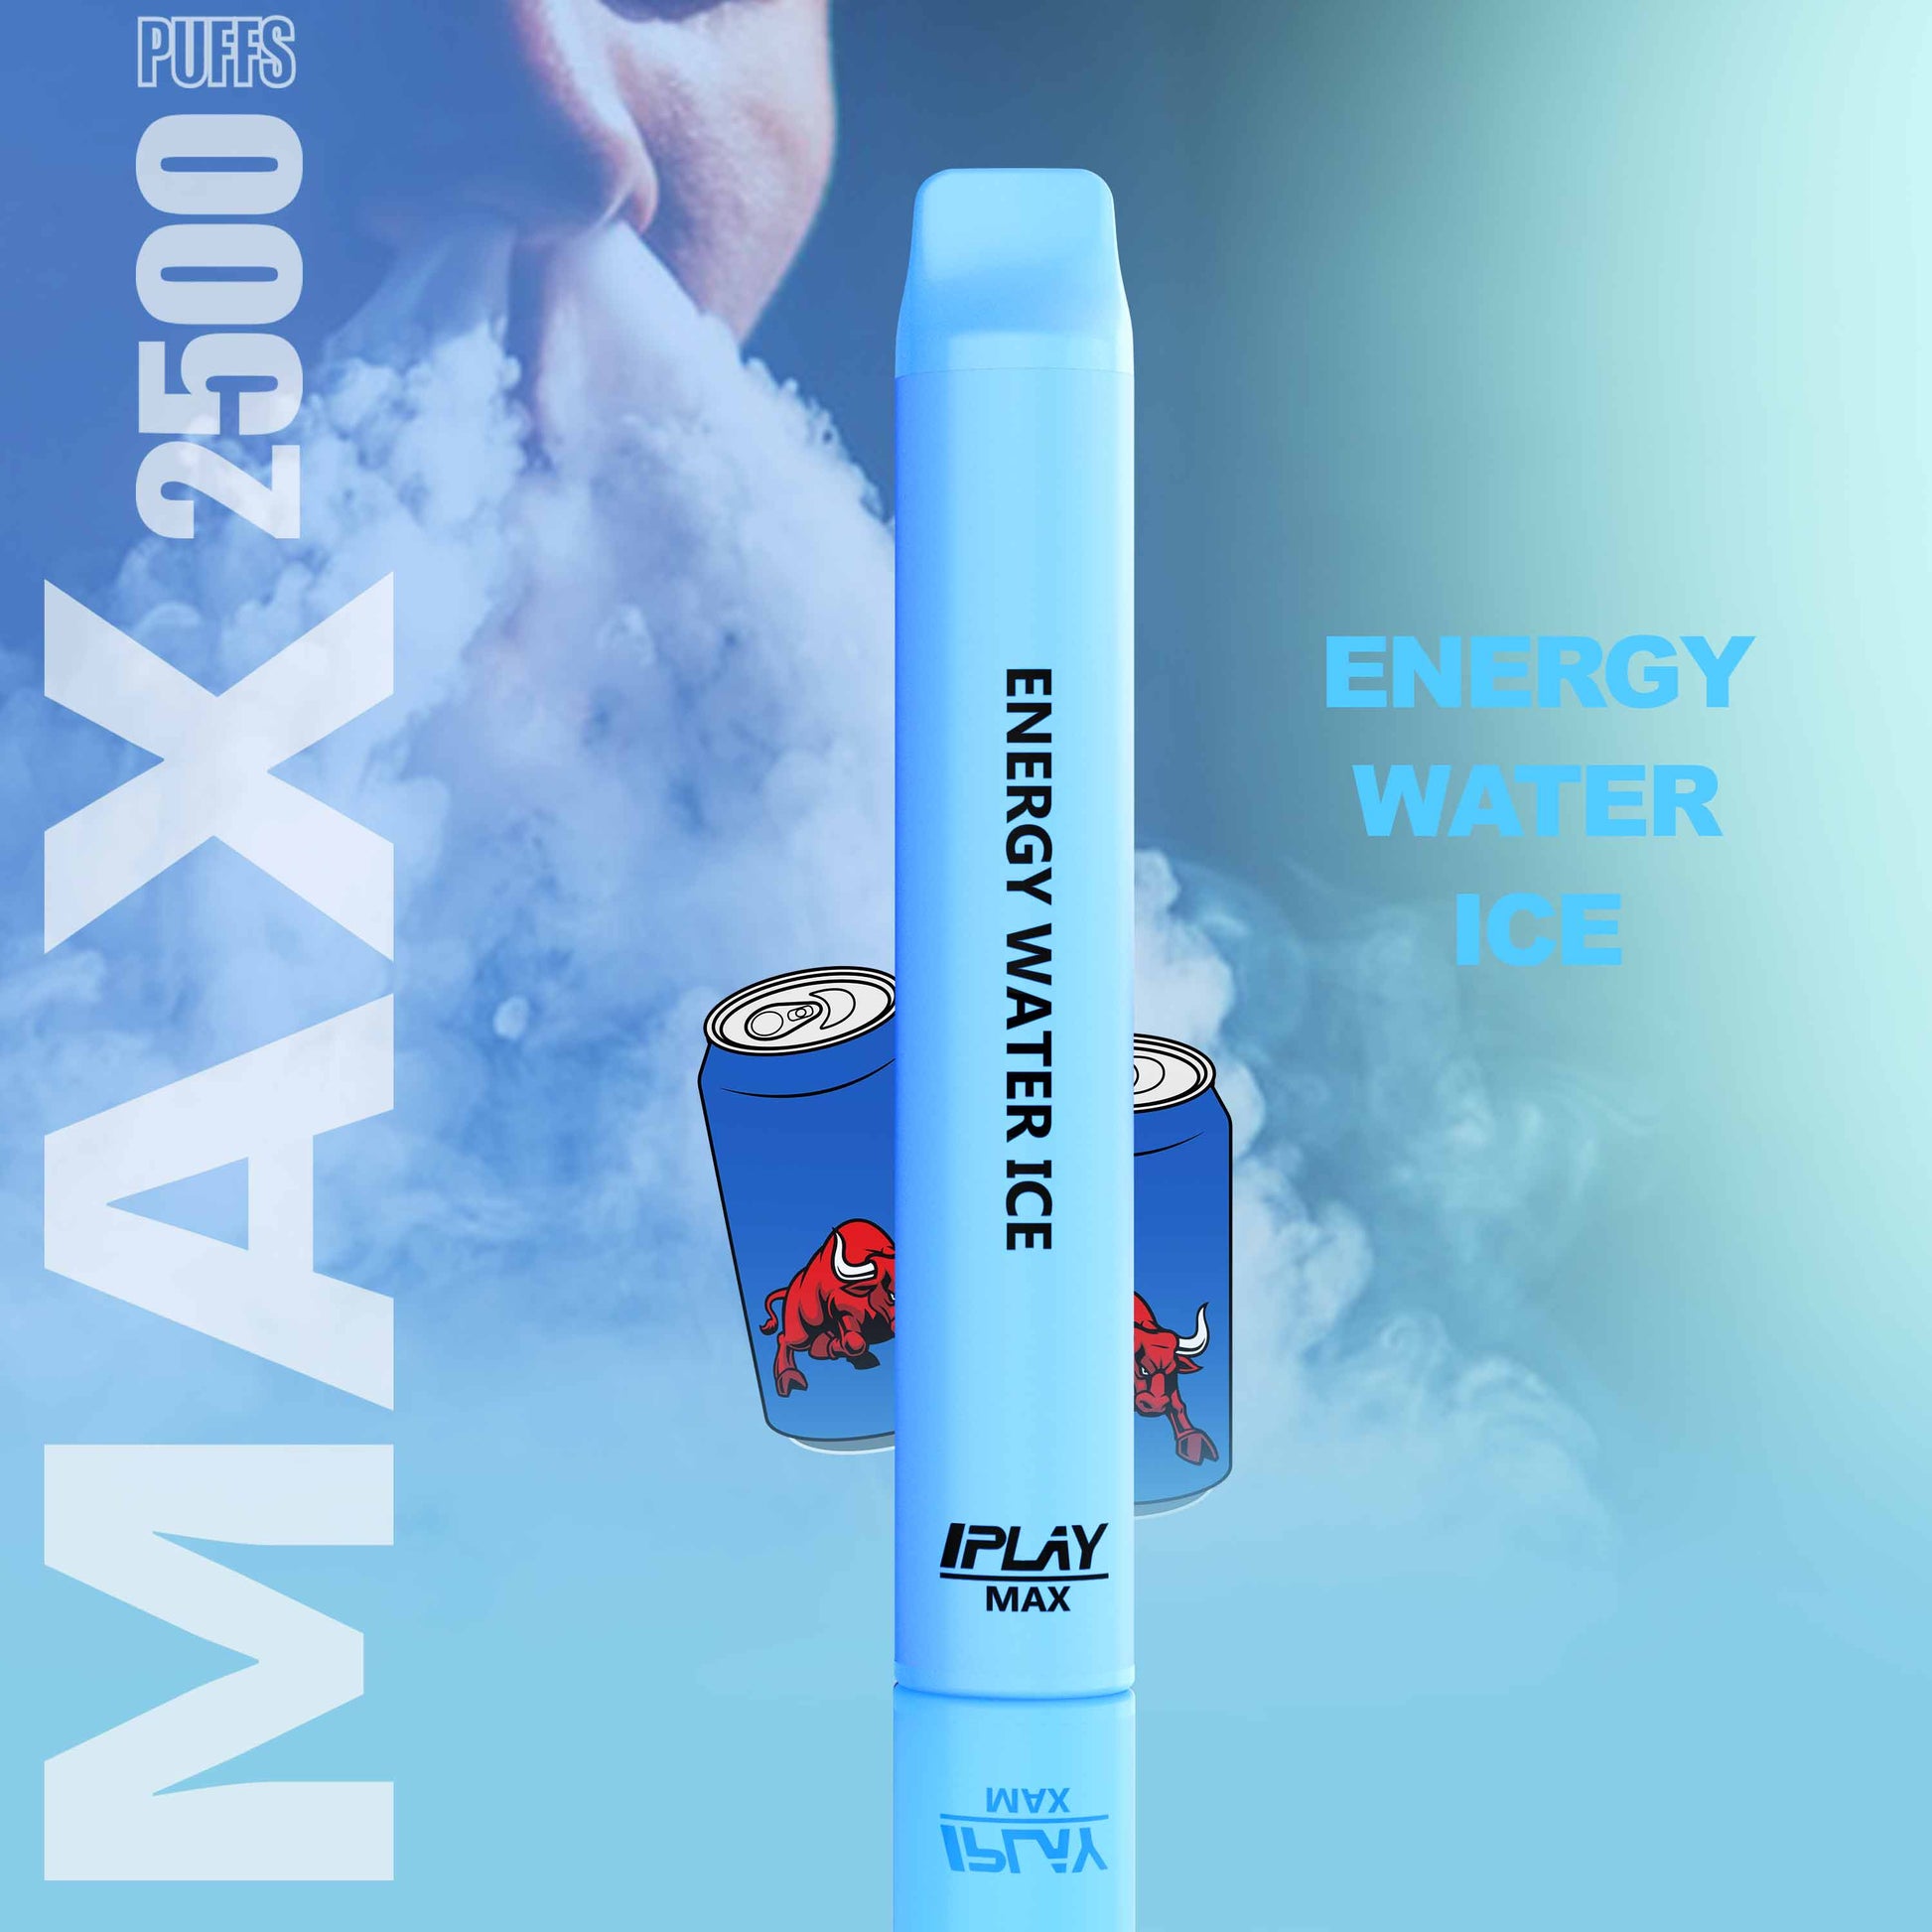 iPlay Max Desechable Sabor - ENERGY WATER ICE REDBULL